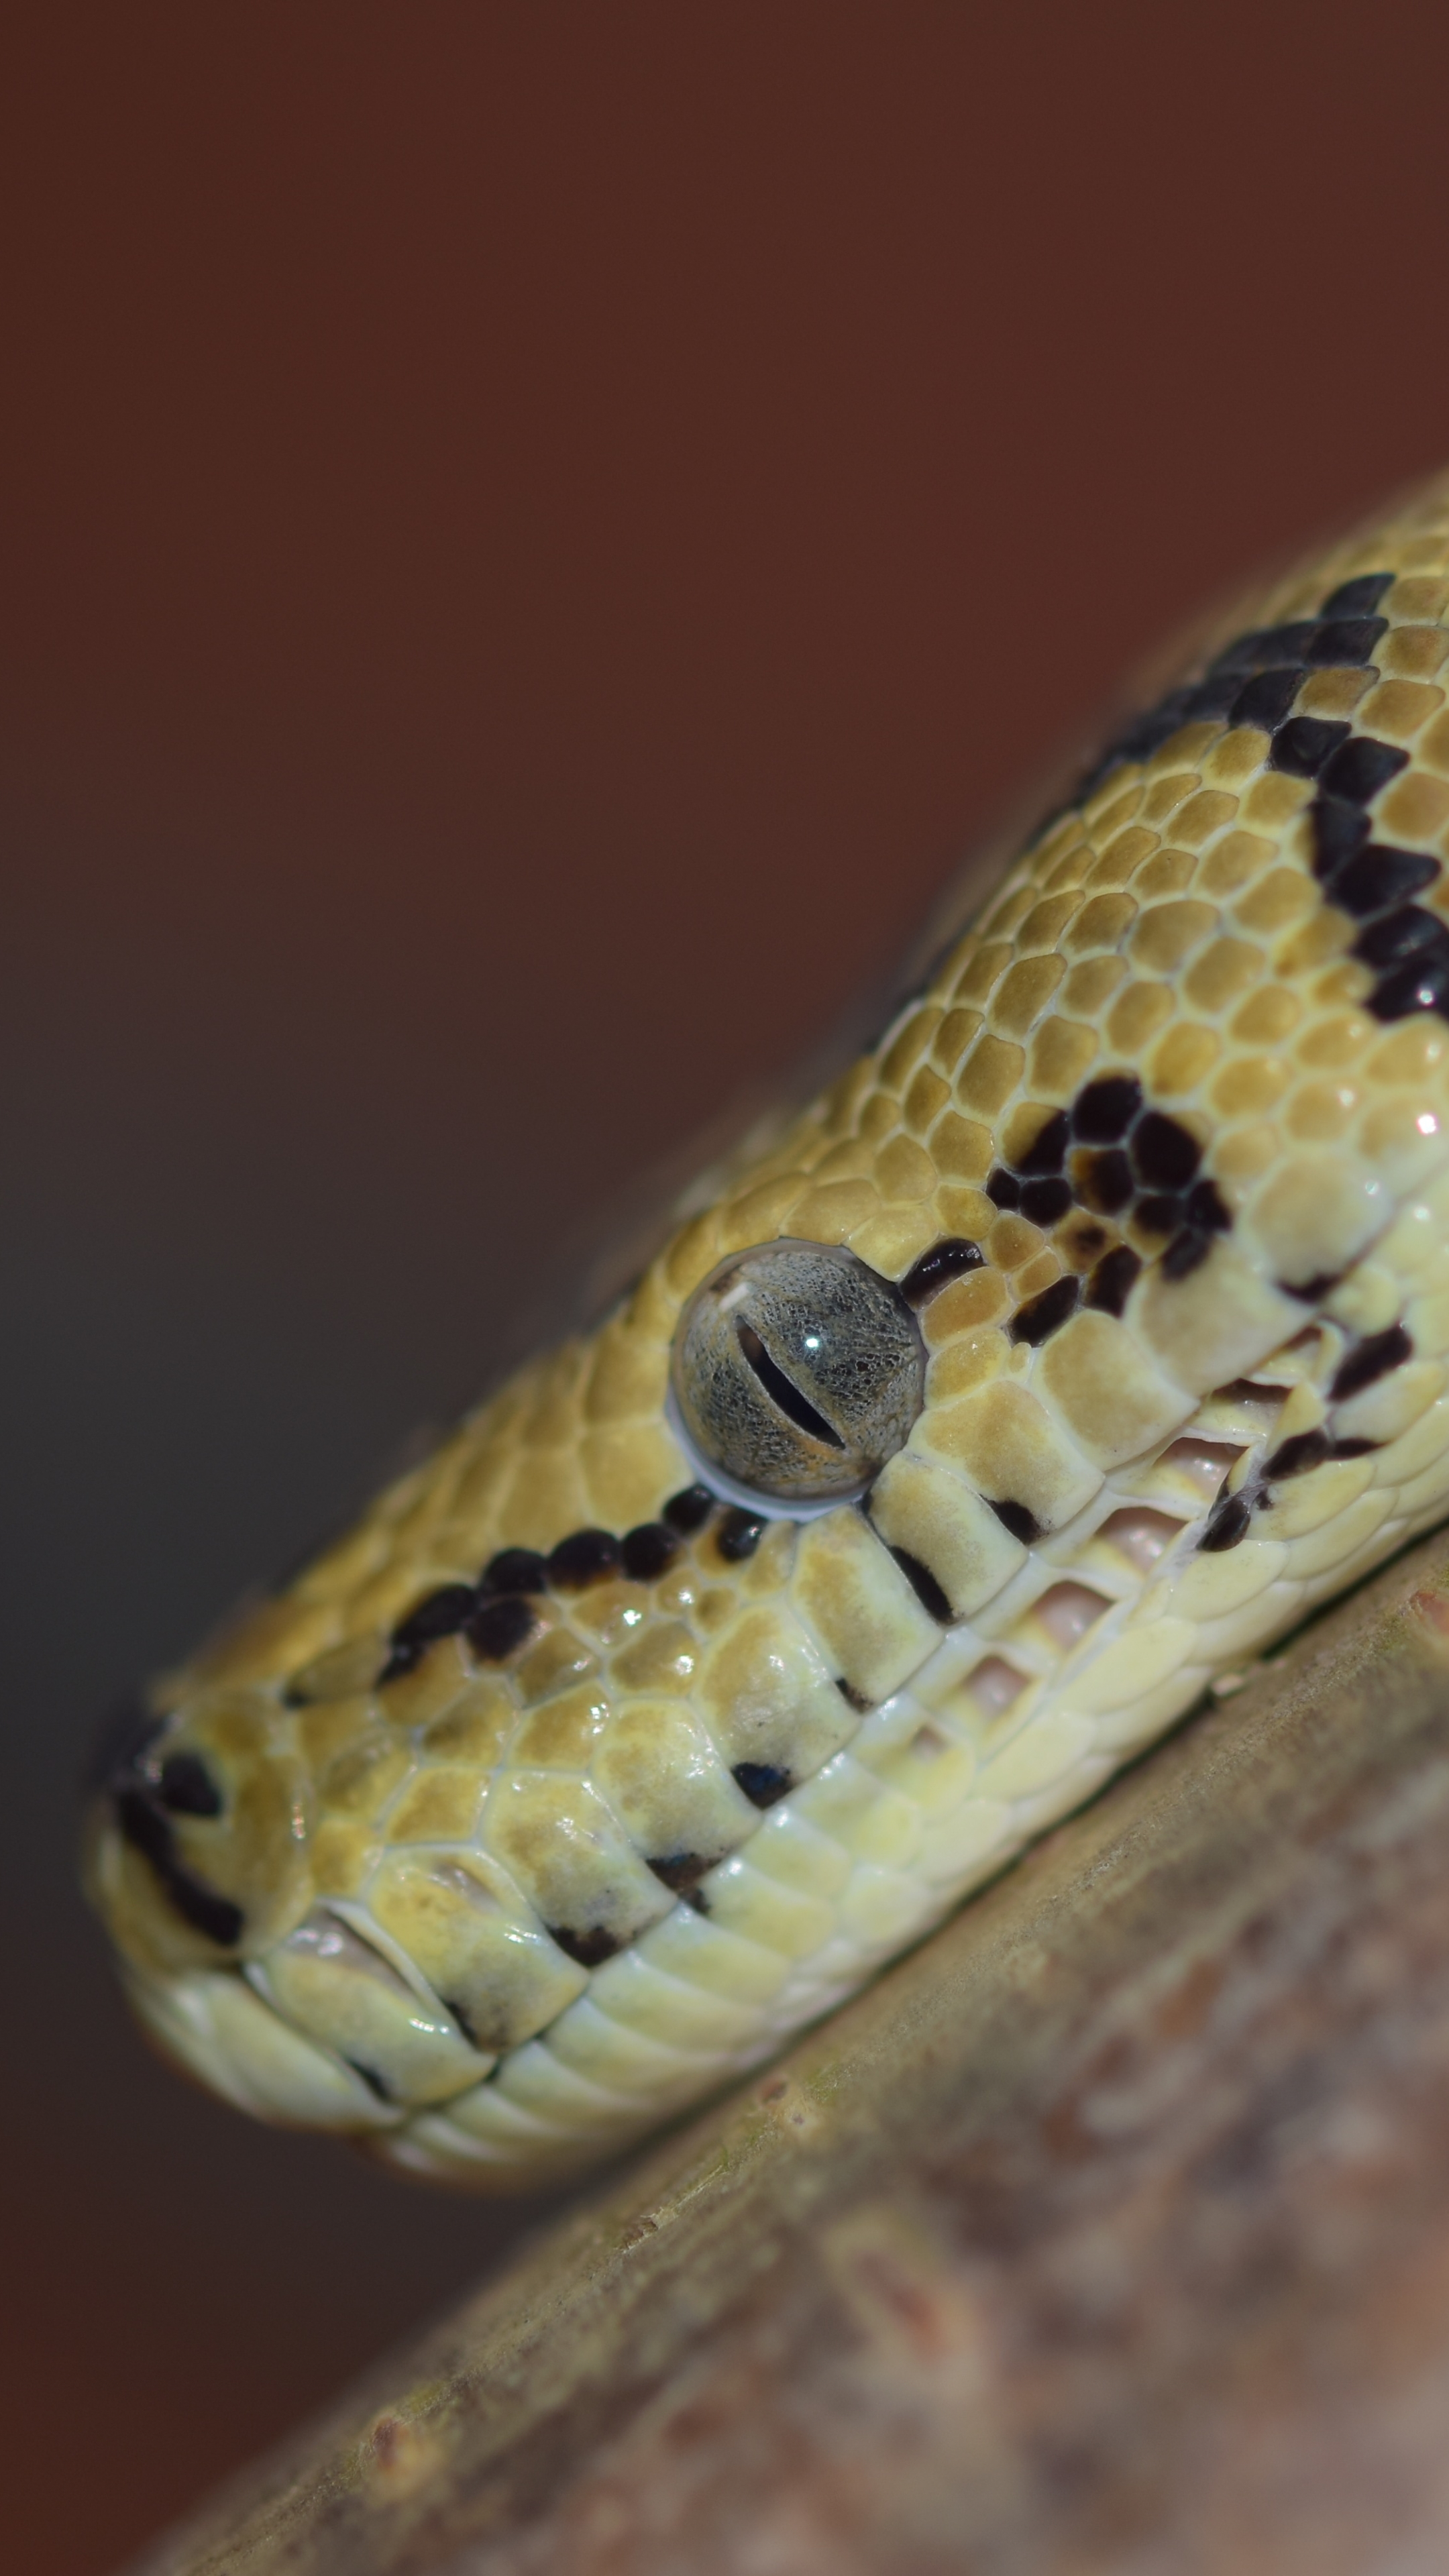 Python close up by sipa